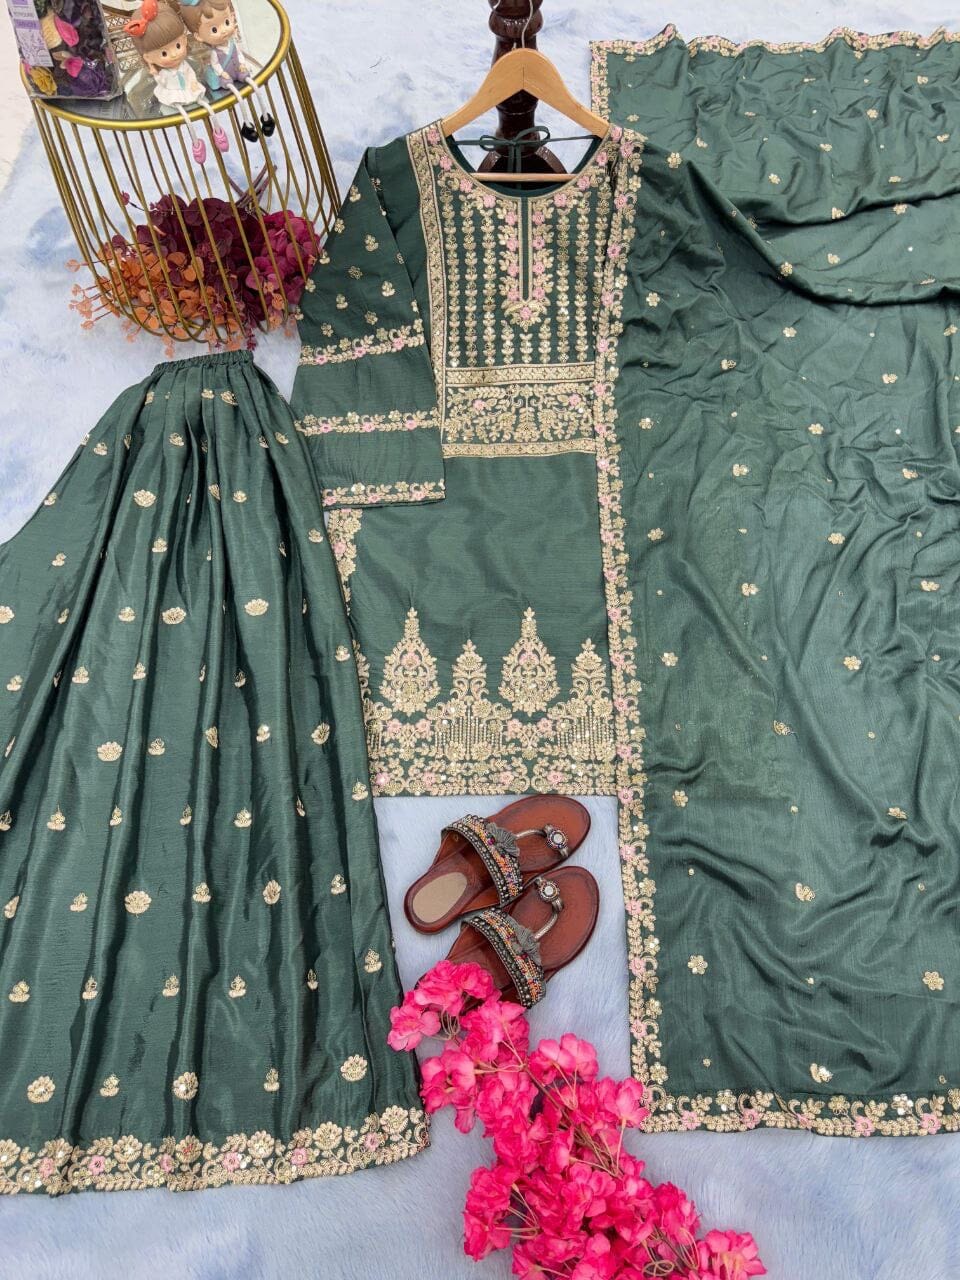 AD 155 Chinnon Silk Designer Georgette Sequence Readymade Plazzo Suit Ready Made Designer Suits Shopin Di Apparels 